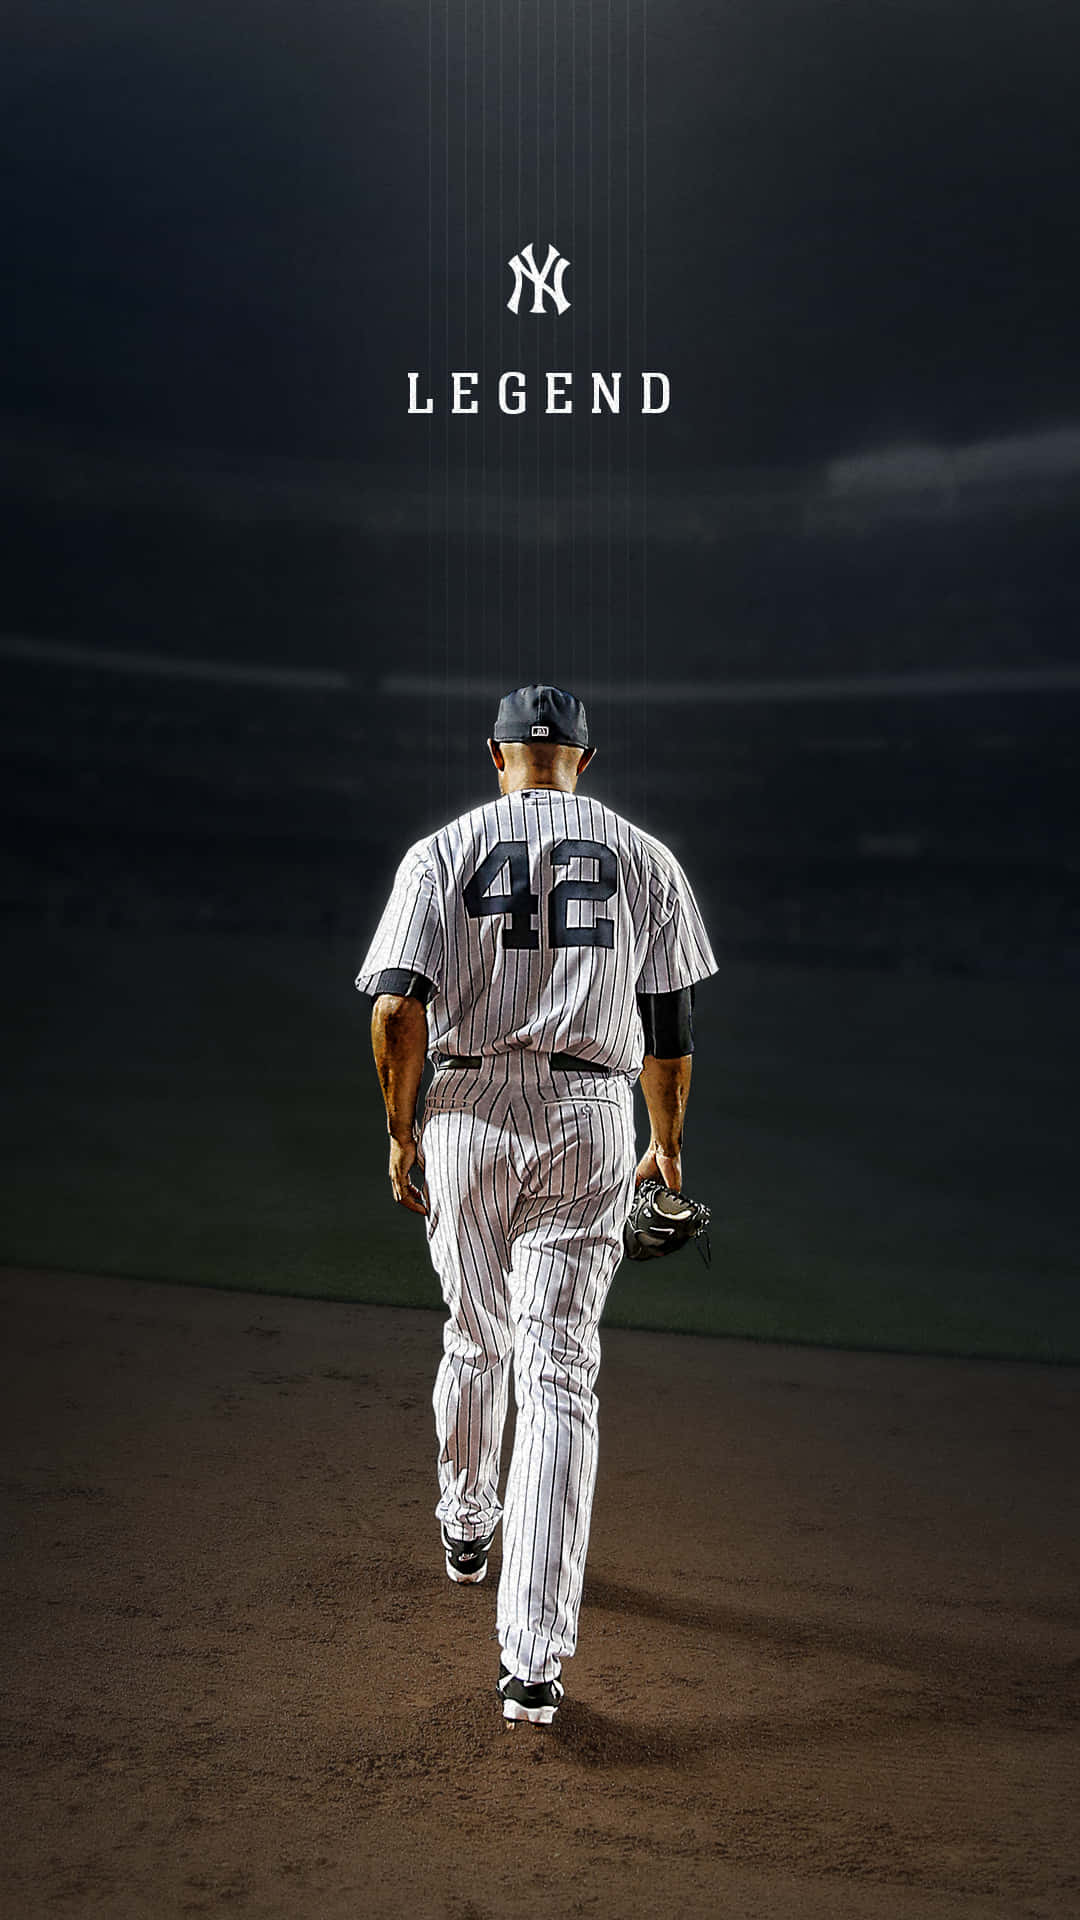 Wallpaper Wednesday: All-Star Edition 🤩 - New York Yankees